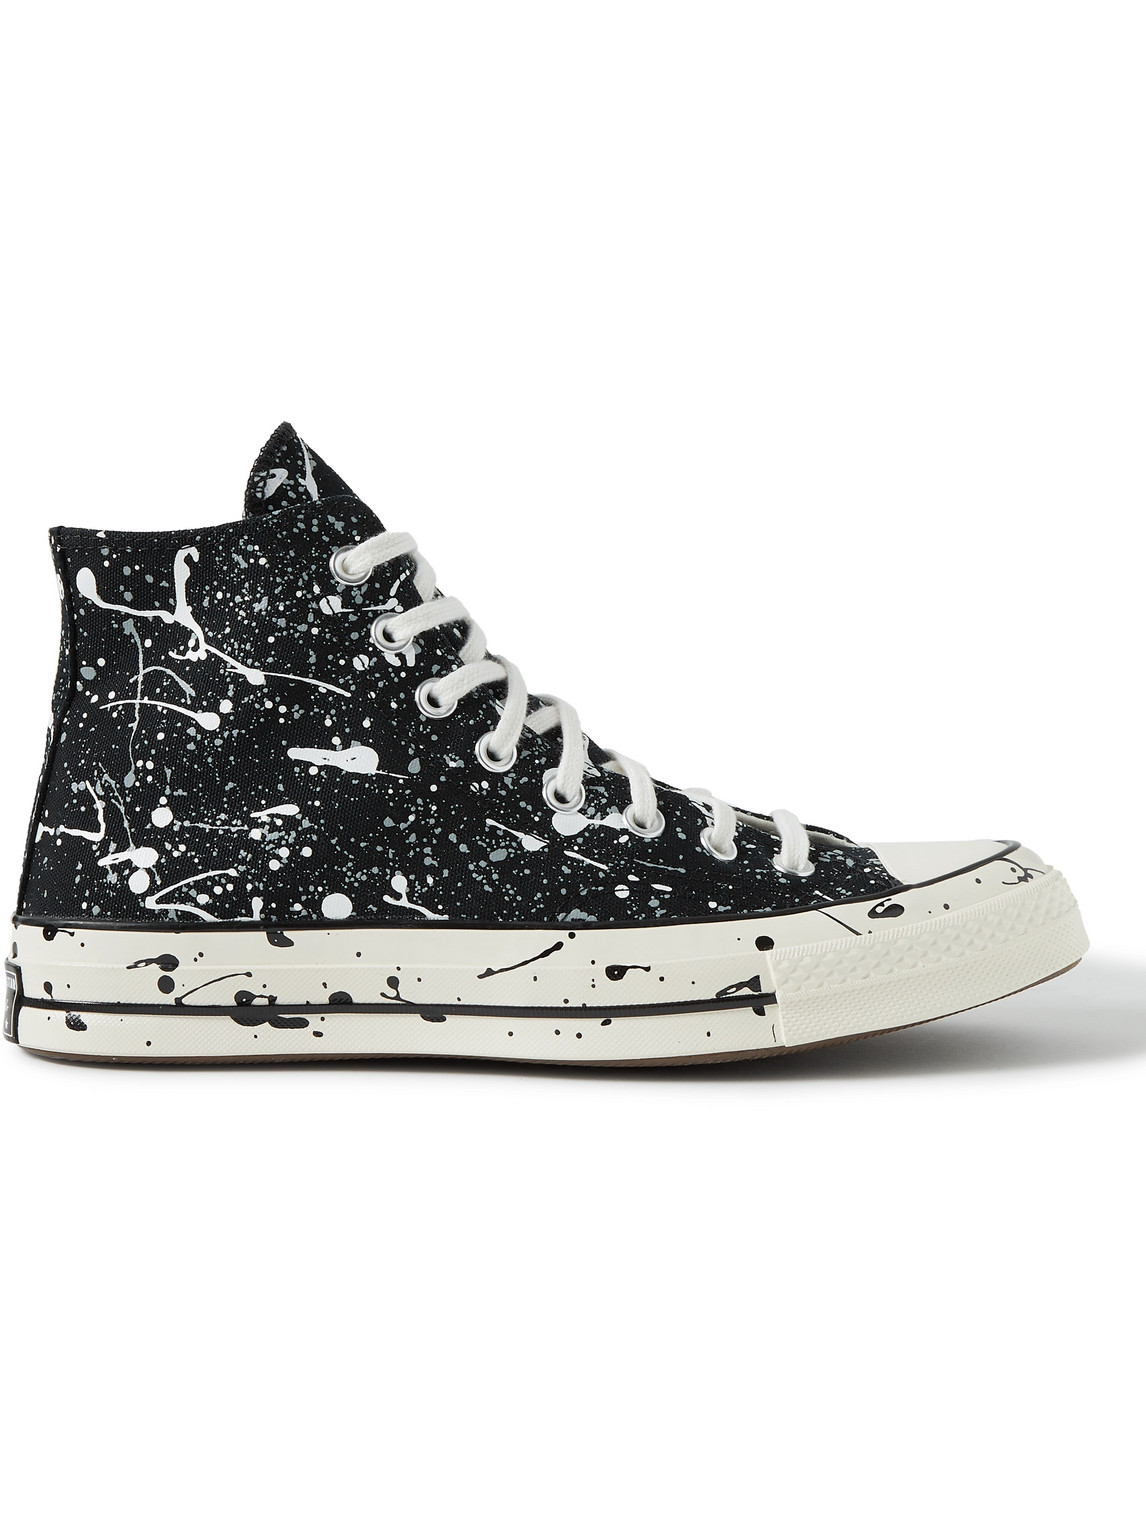 Converse Chuck 70 Paint-Splattered Canvas High-Top Sneakers